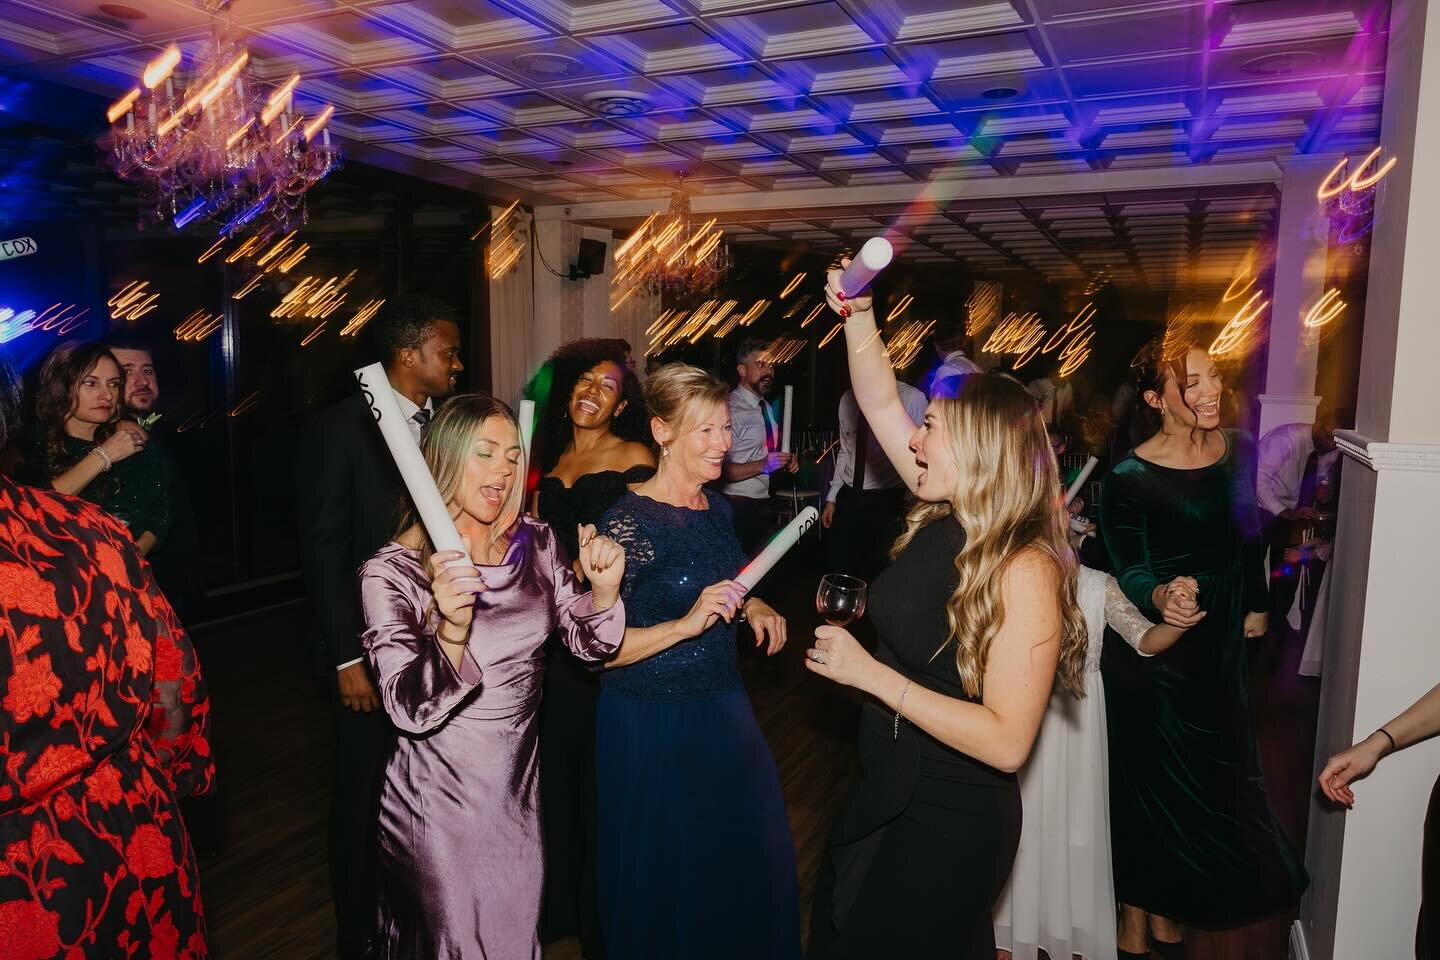 Here&rsquo;s to more amazing parties in 2️⃣0️⃣2️⃣4️⃣ Happy New Year, friends!

#lizegbertphoto #weddingphotography #weddingday #dancefloor #shutterdrag #pittsburghphotographer